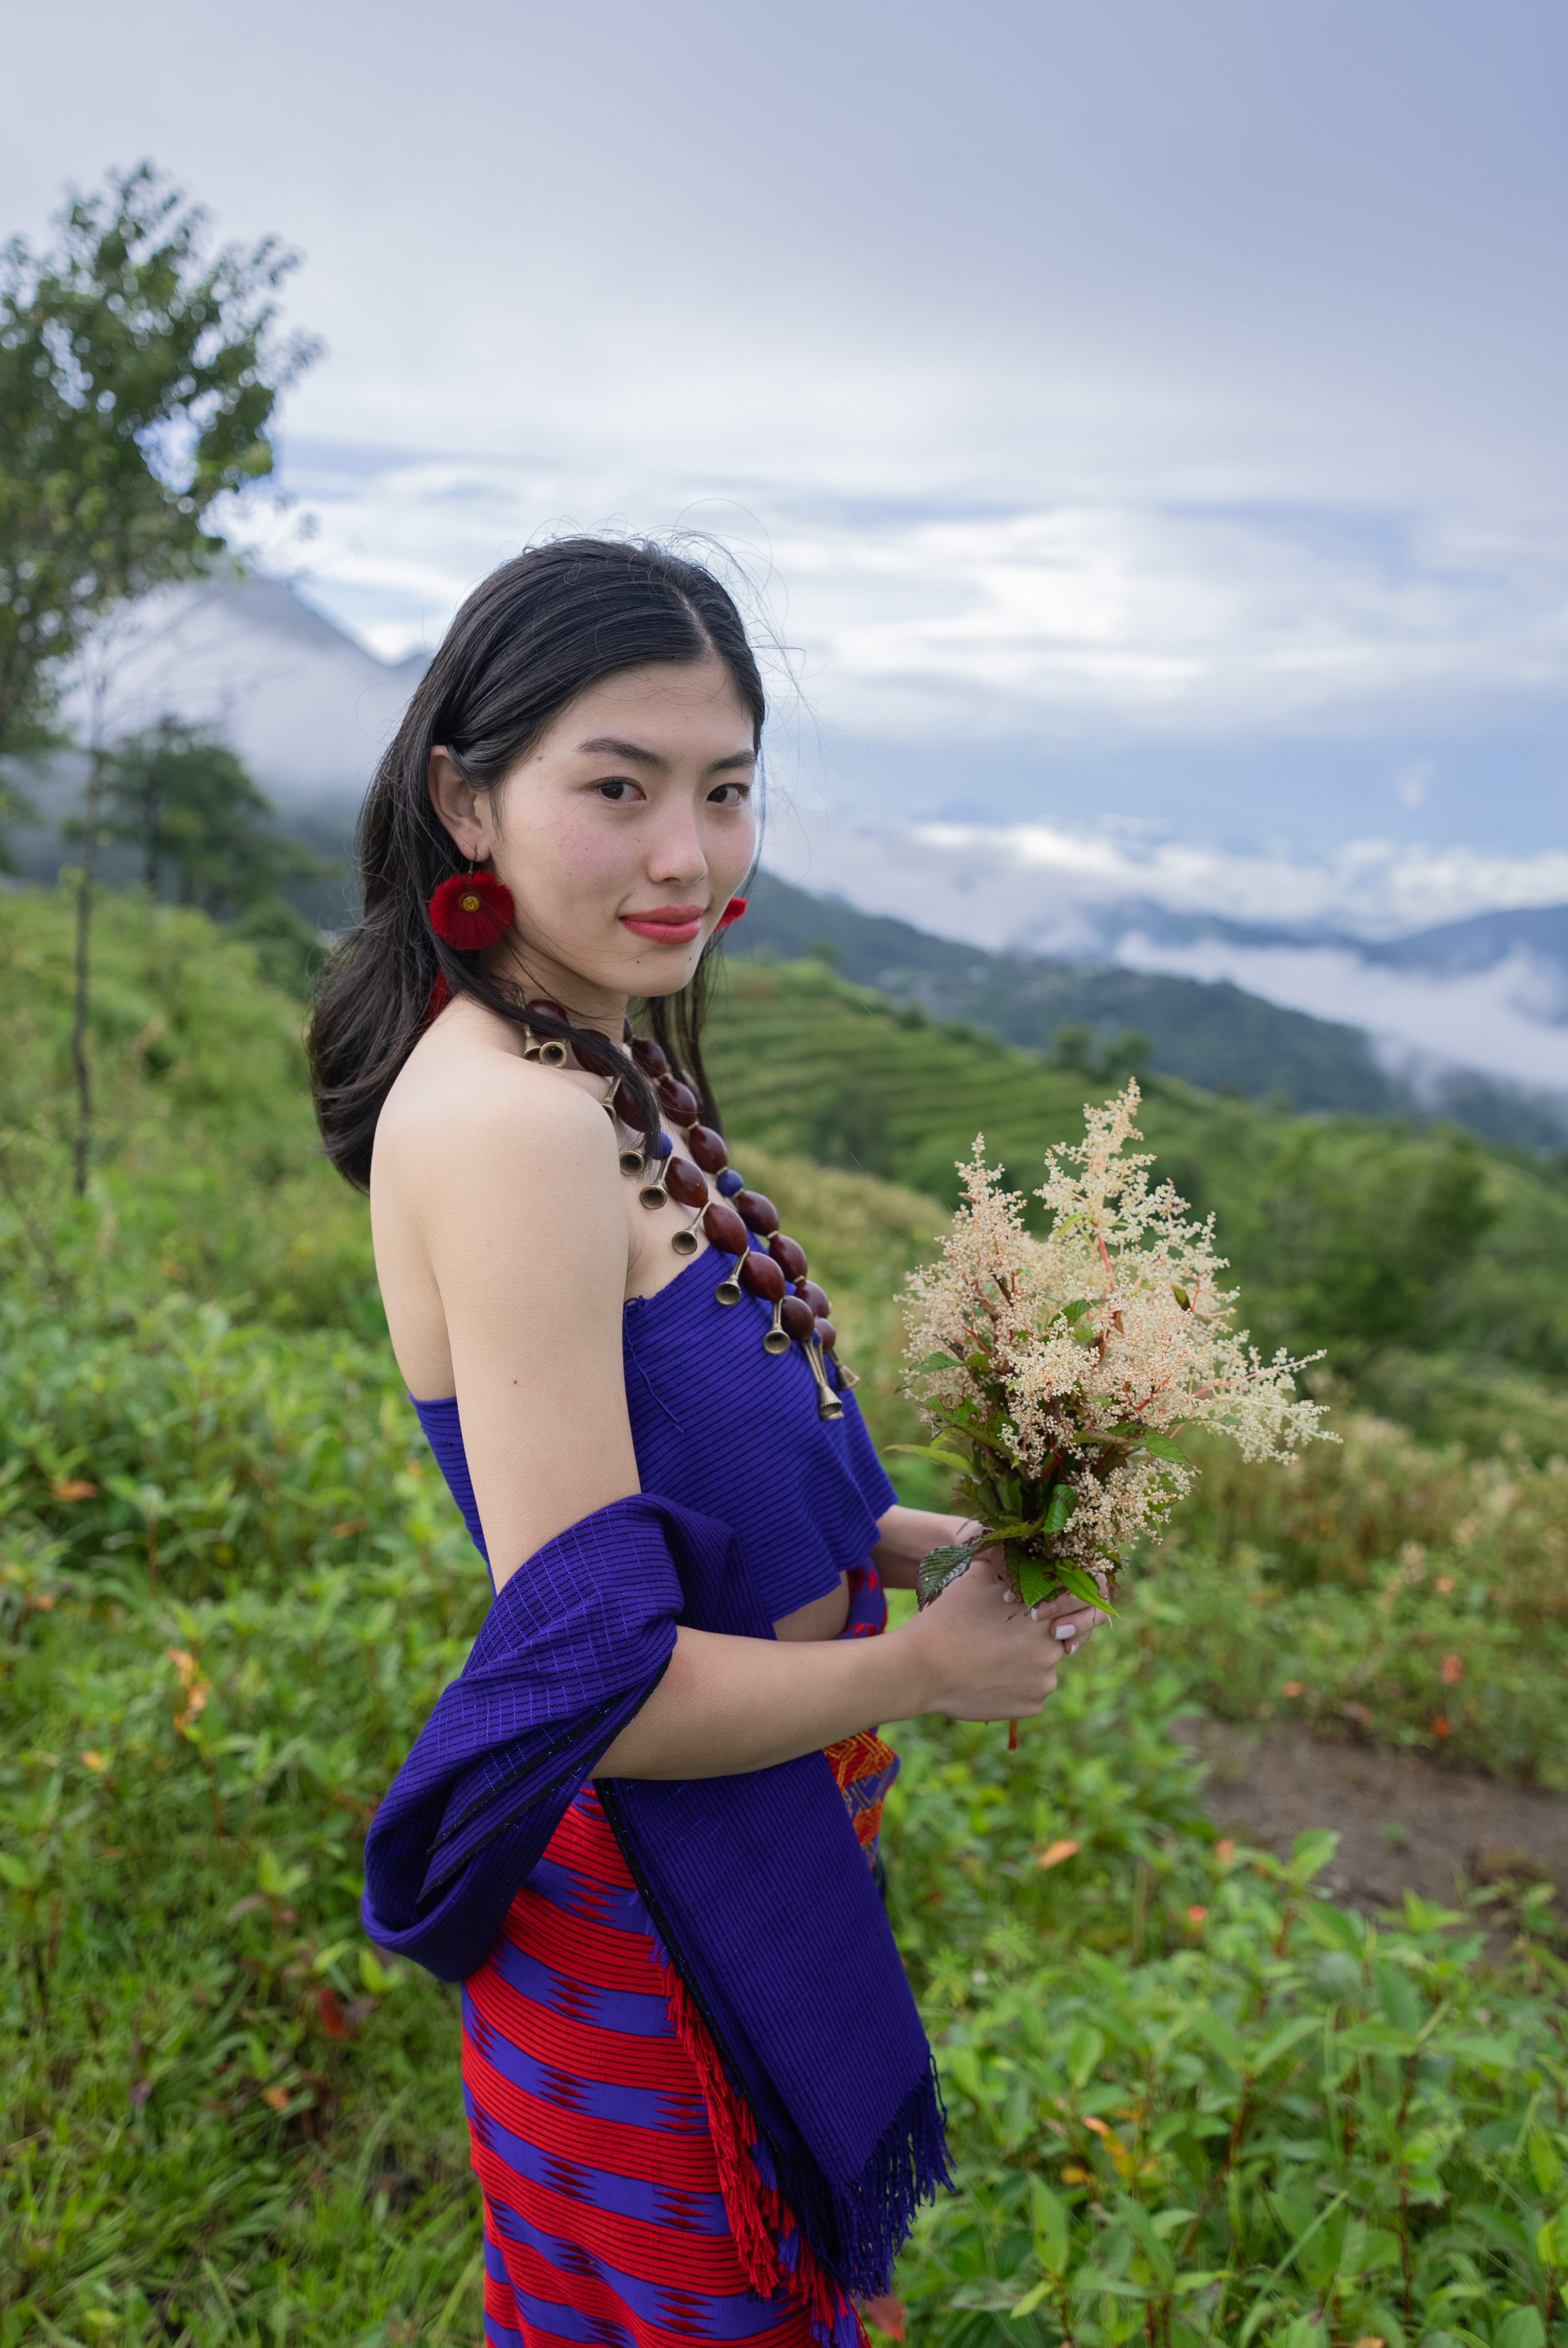 Nagaland me Tribe ke sath #traditional #dress me #photo lete hue  #hornbillfestival #kisamaheritagevillage me 😍😍 #desiyatrivikas #nagaland…  | Instagram